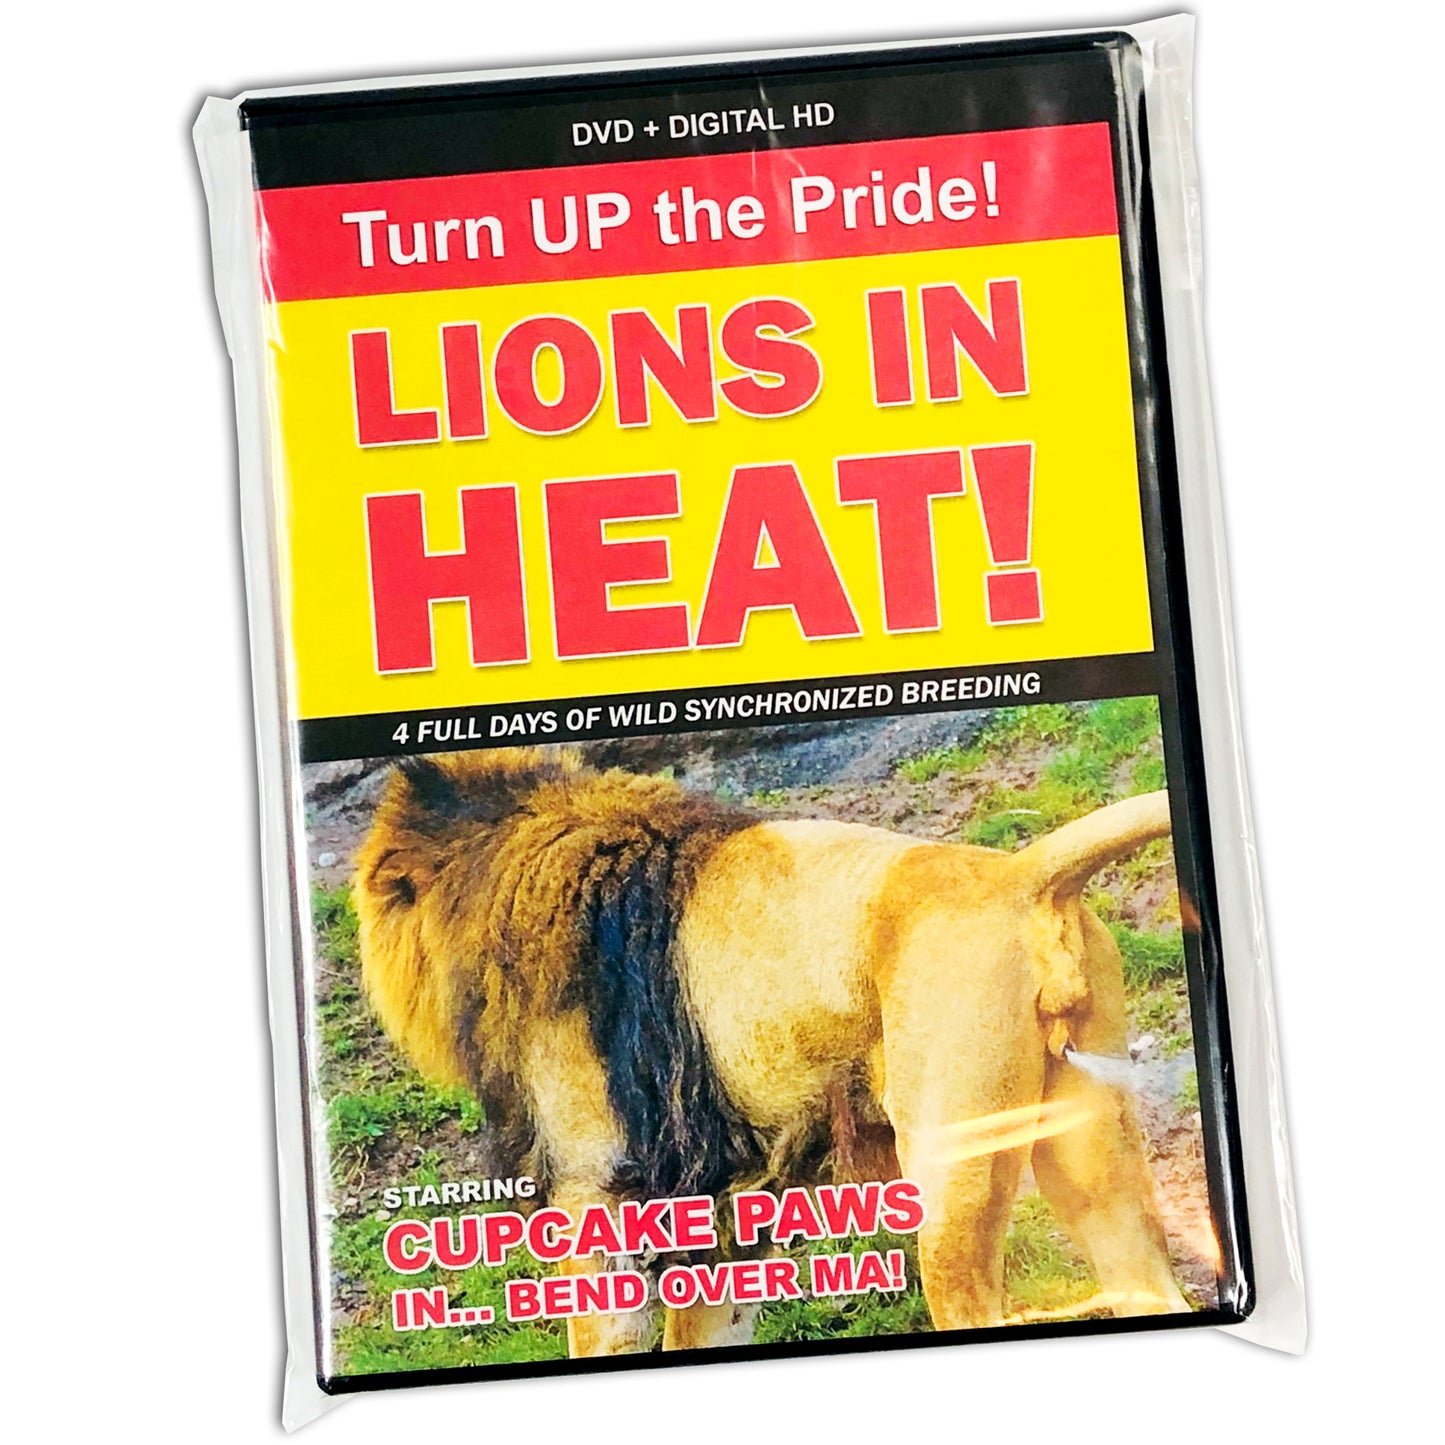 Lions in Heat Fake DVD mail prank